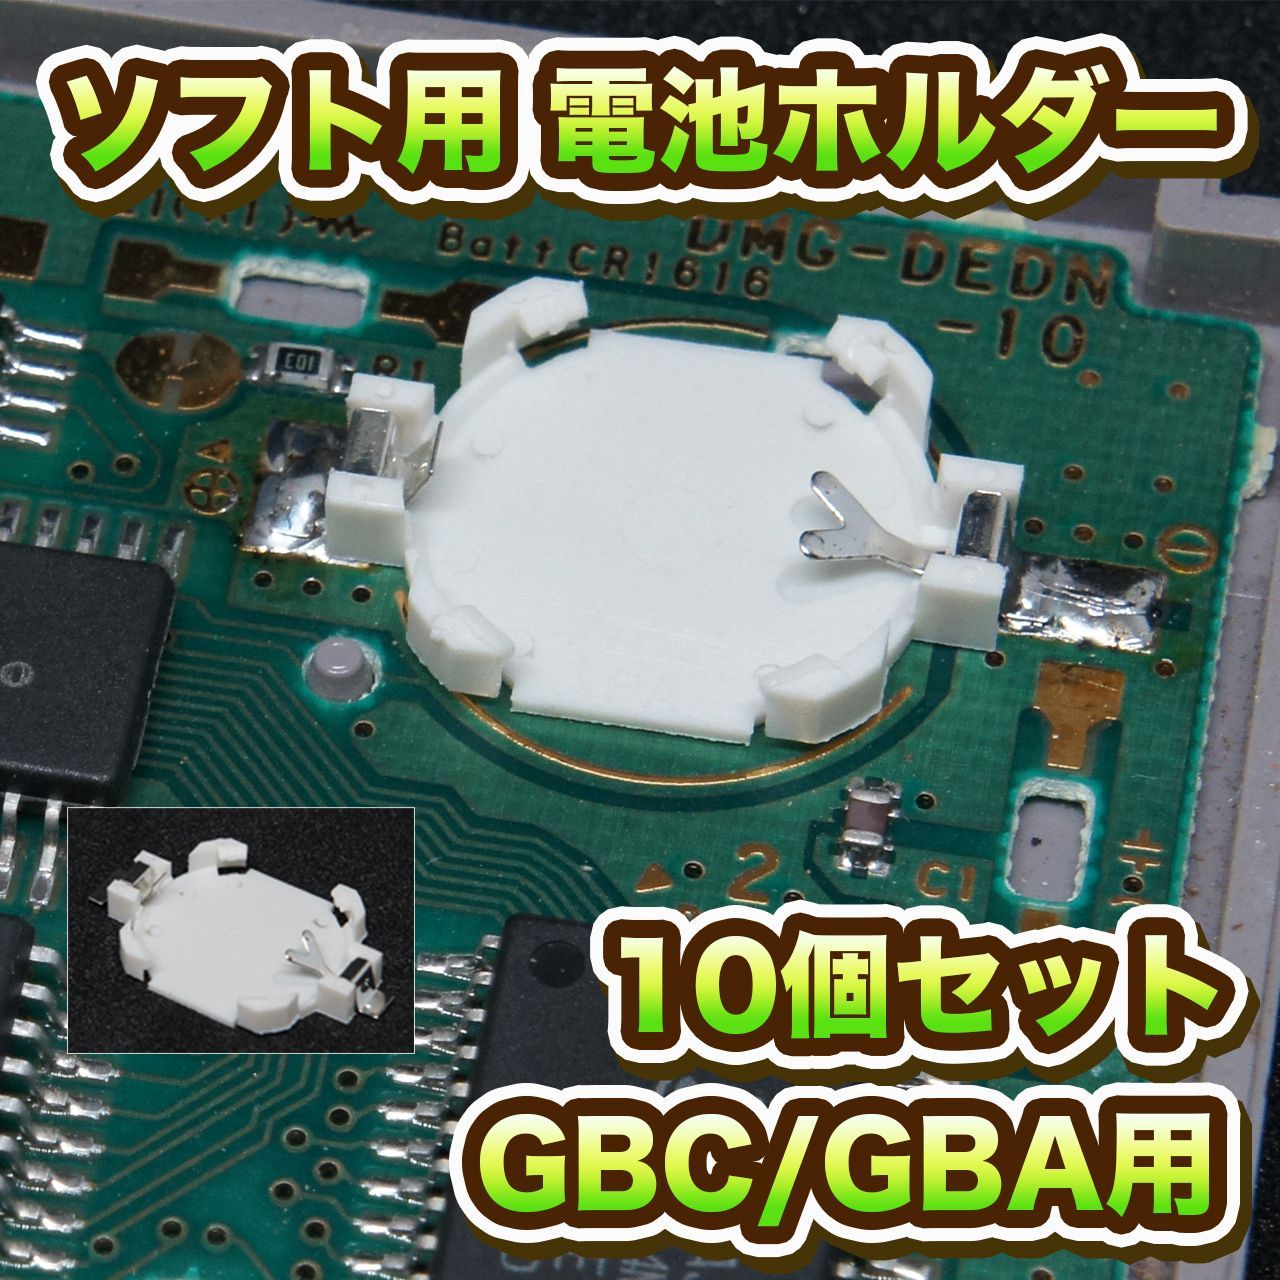 GB/GBC/GBA用 電池ホルダー 10個セット - メルカリ